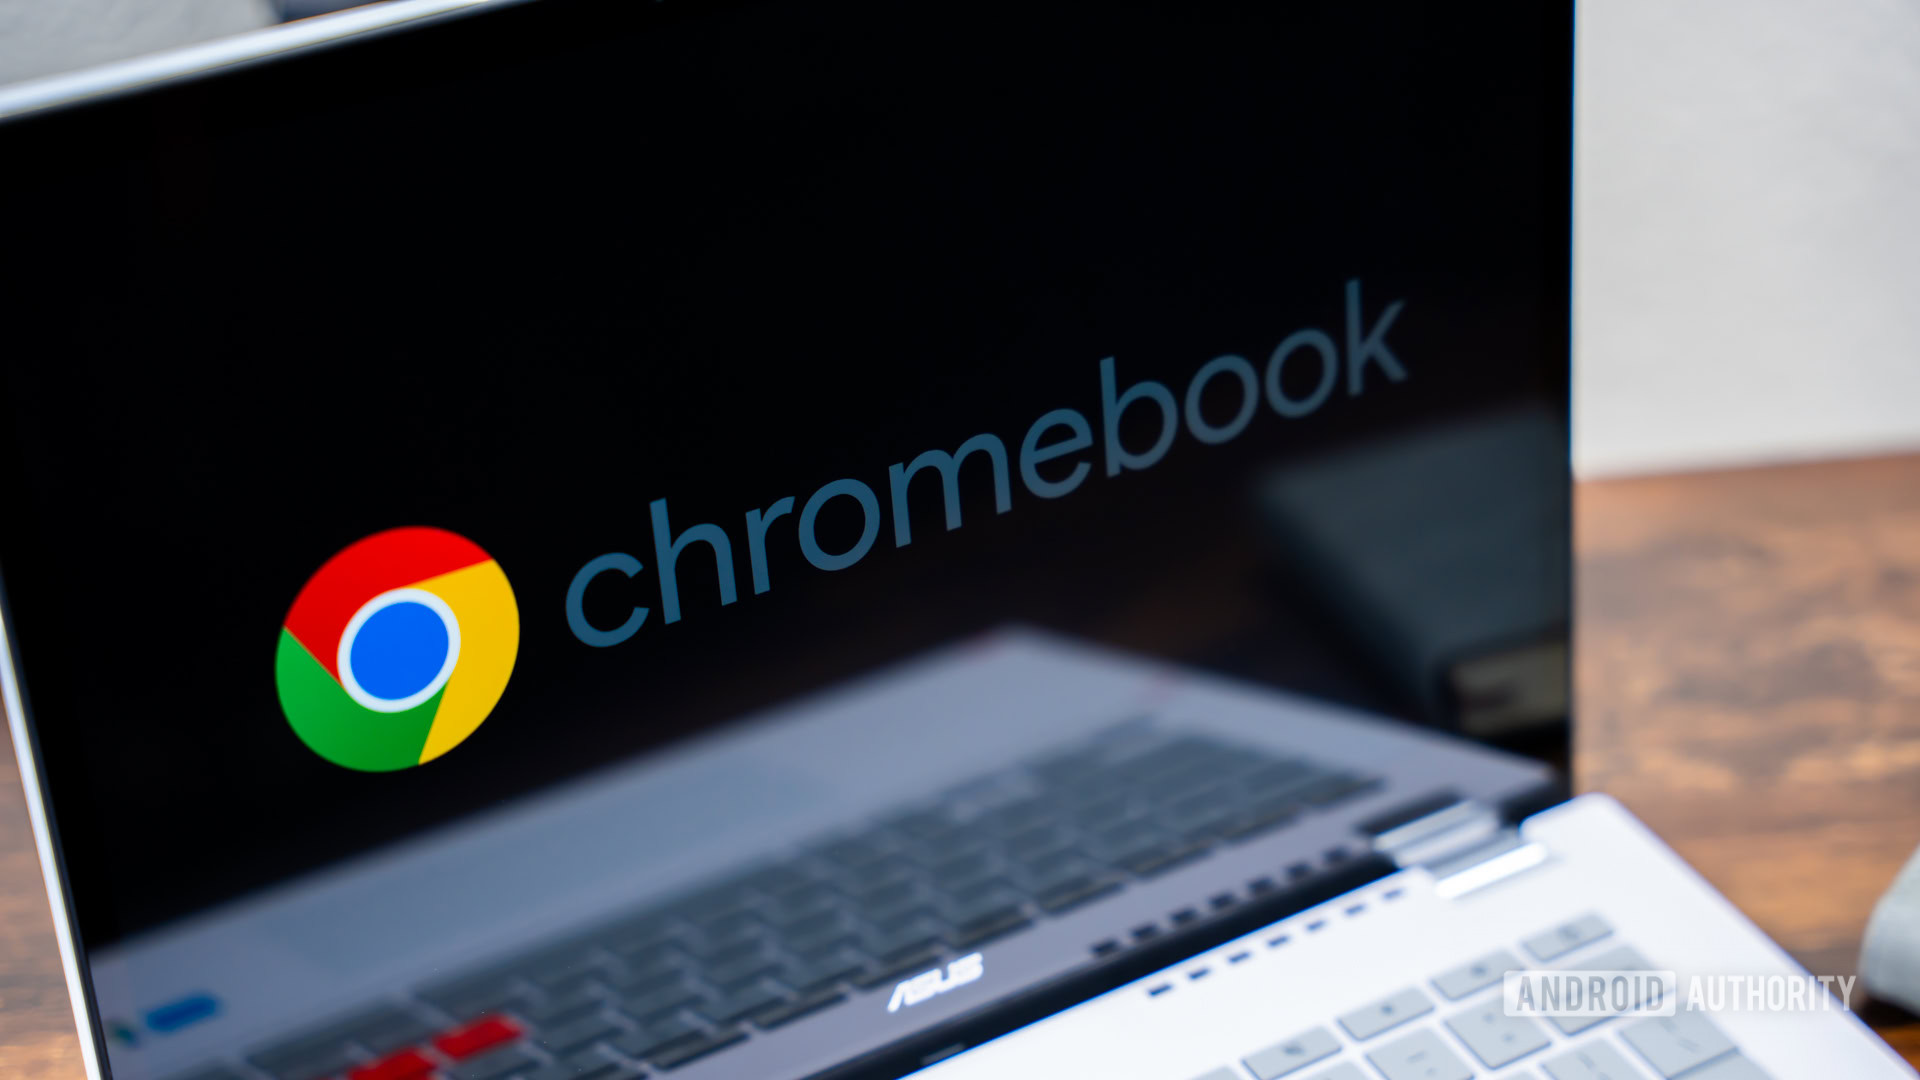 Chromebook with Chromebook logo on screen stock photo (19)